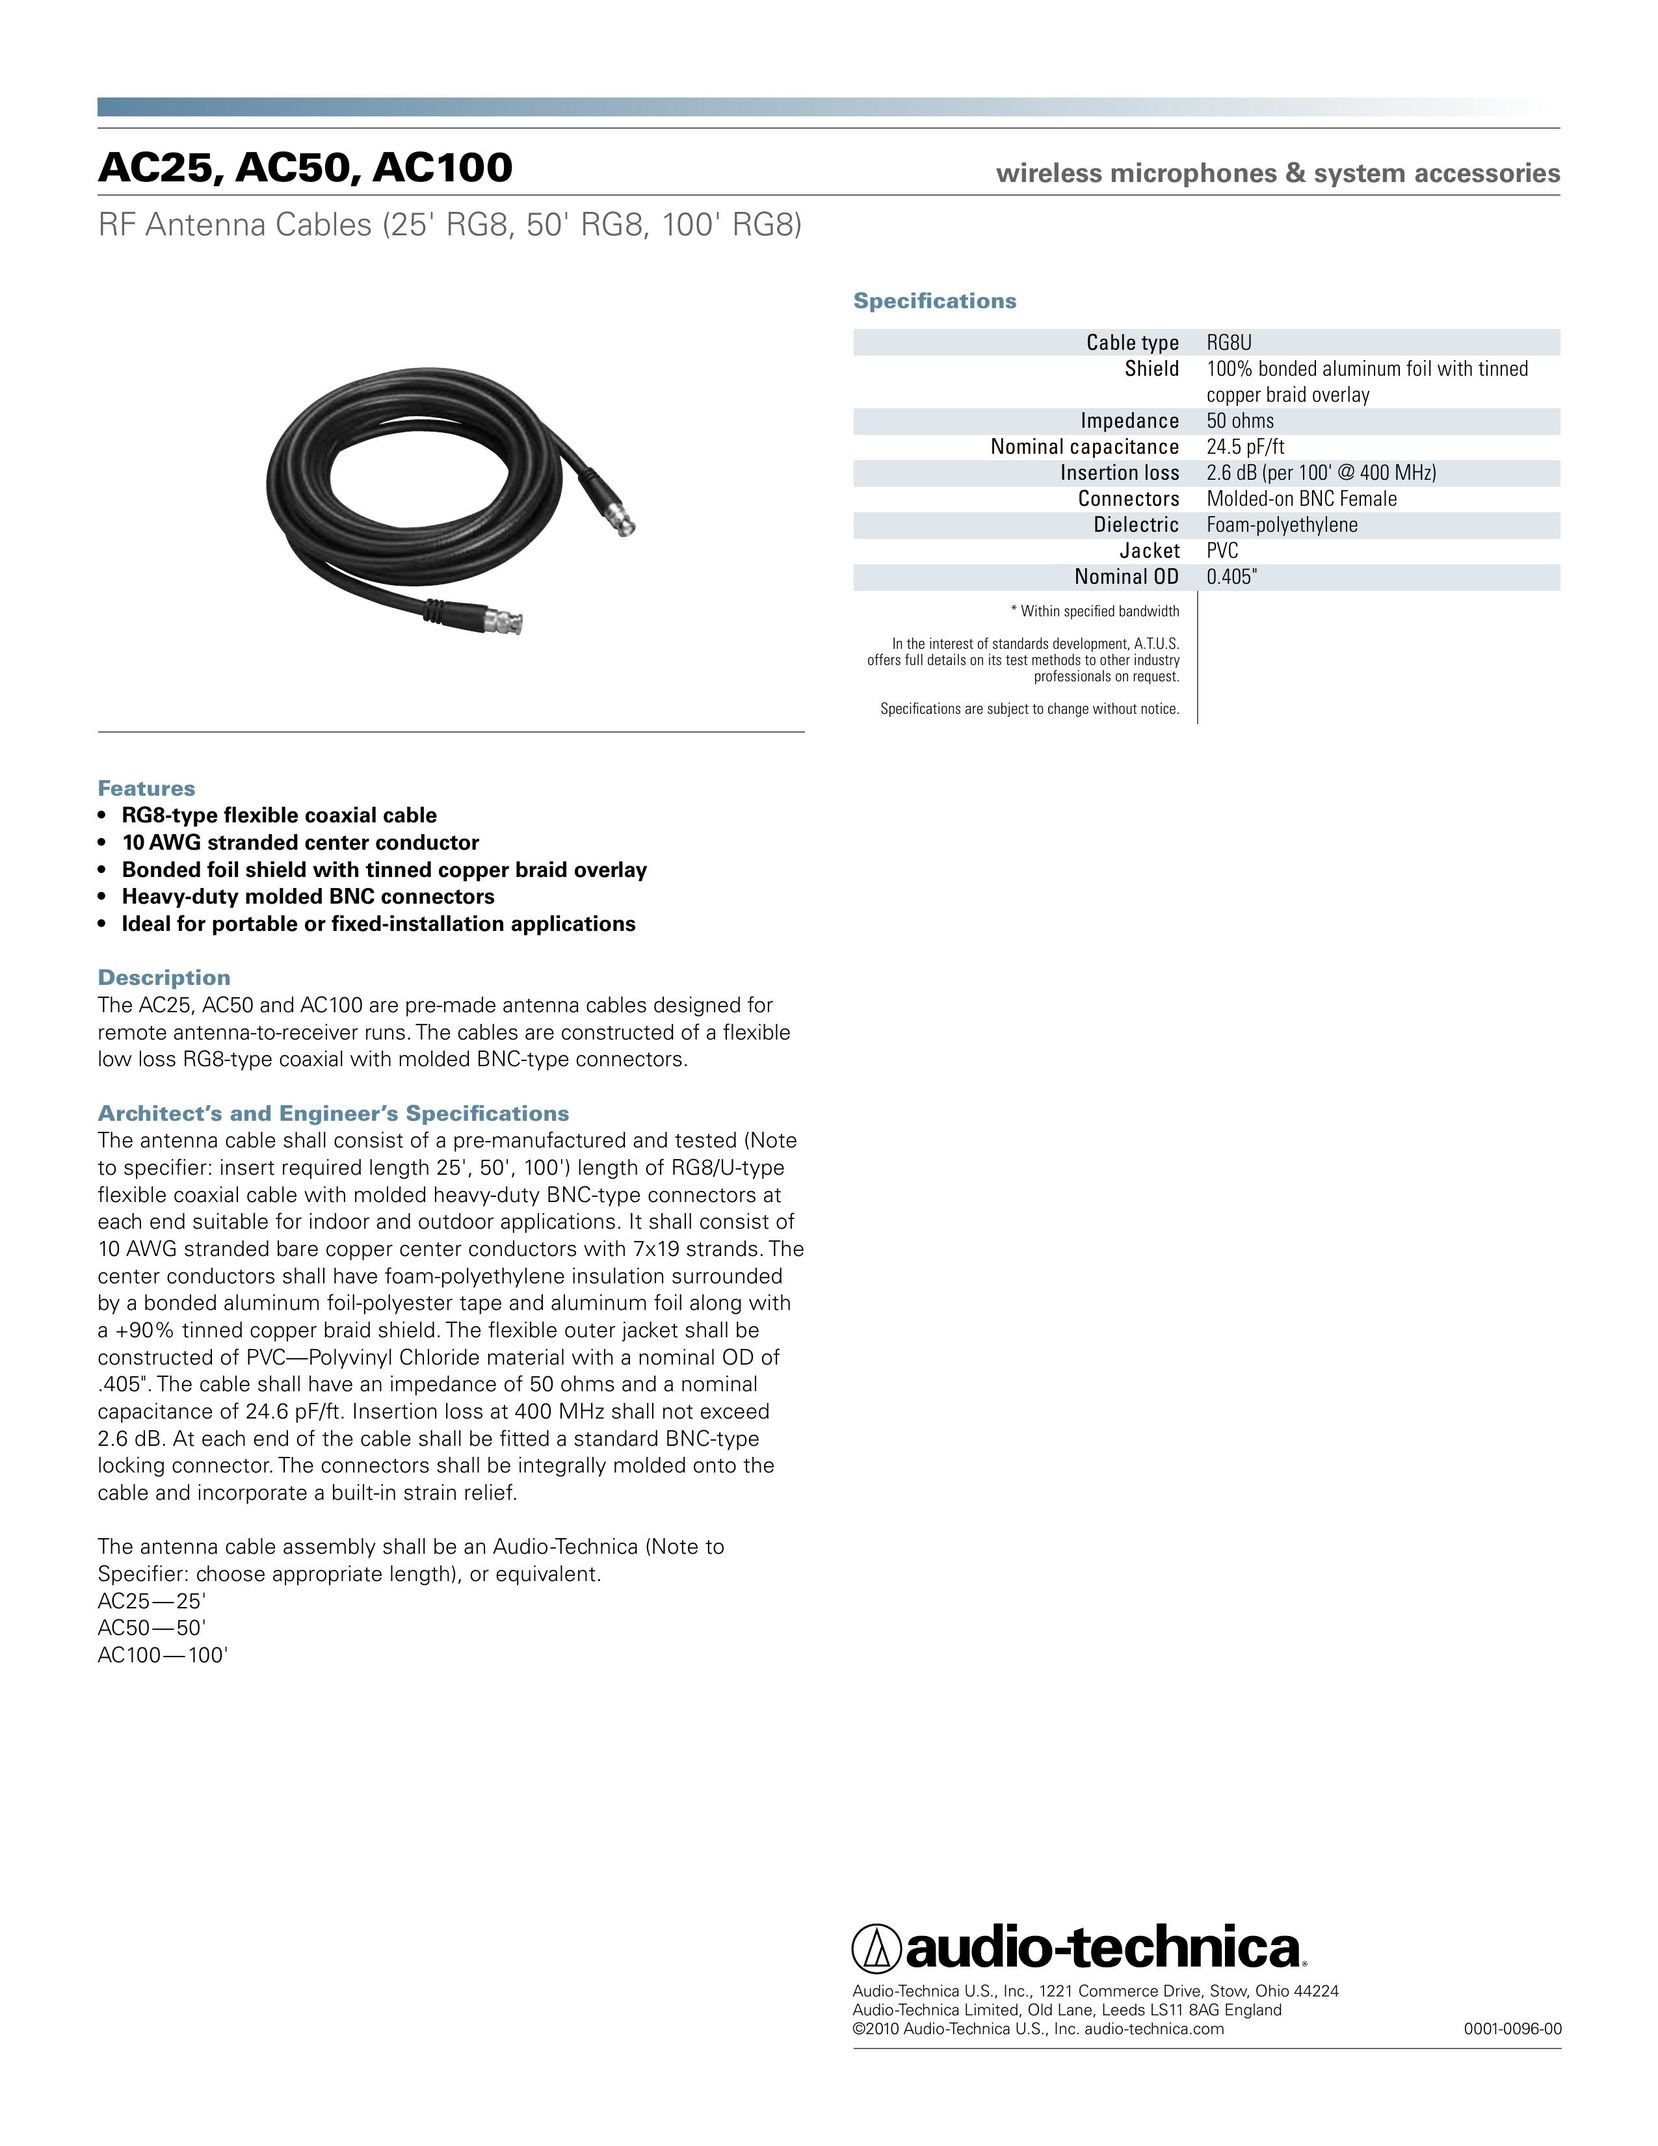 Audio-Technica AC25 Video Gaming Accessories User Manual